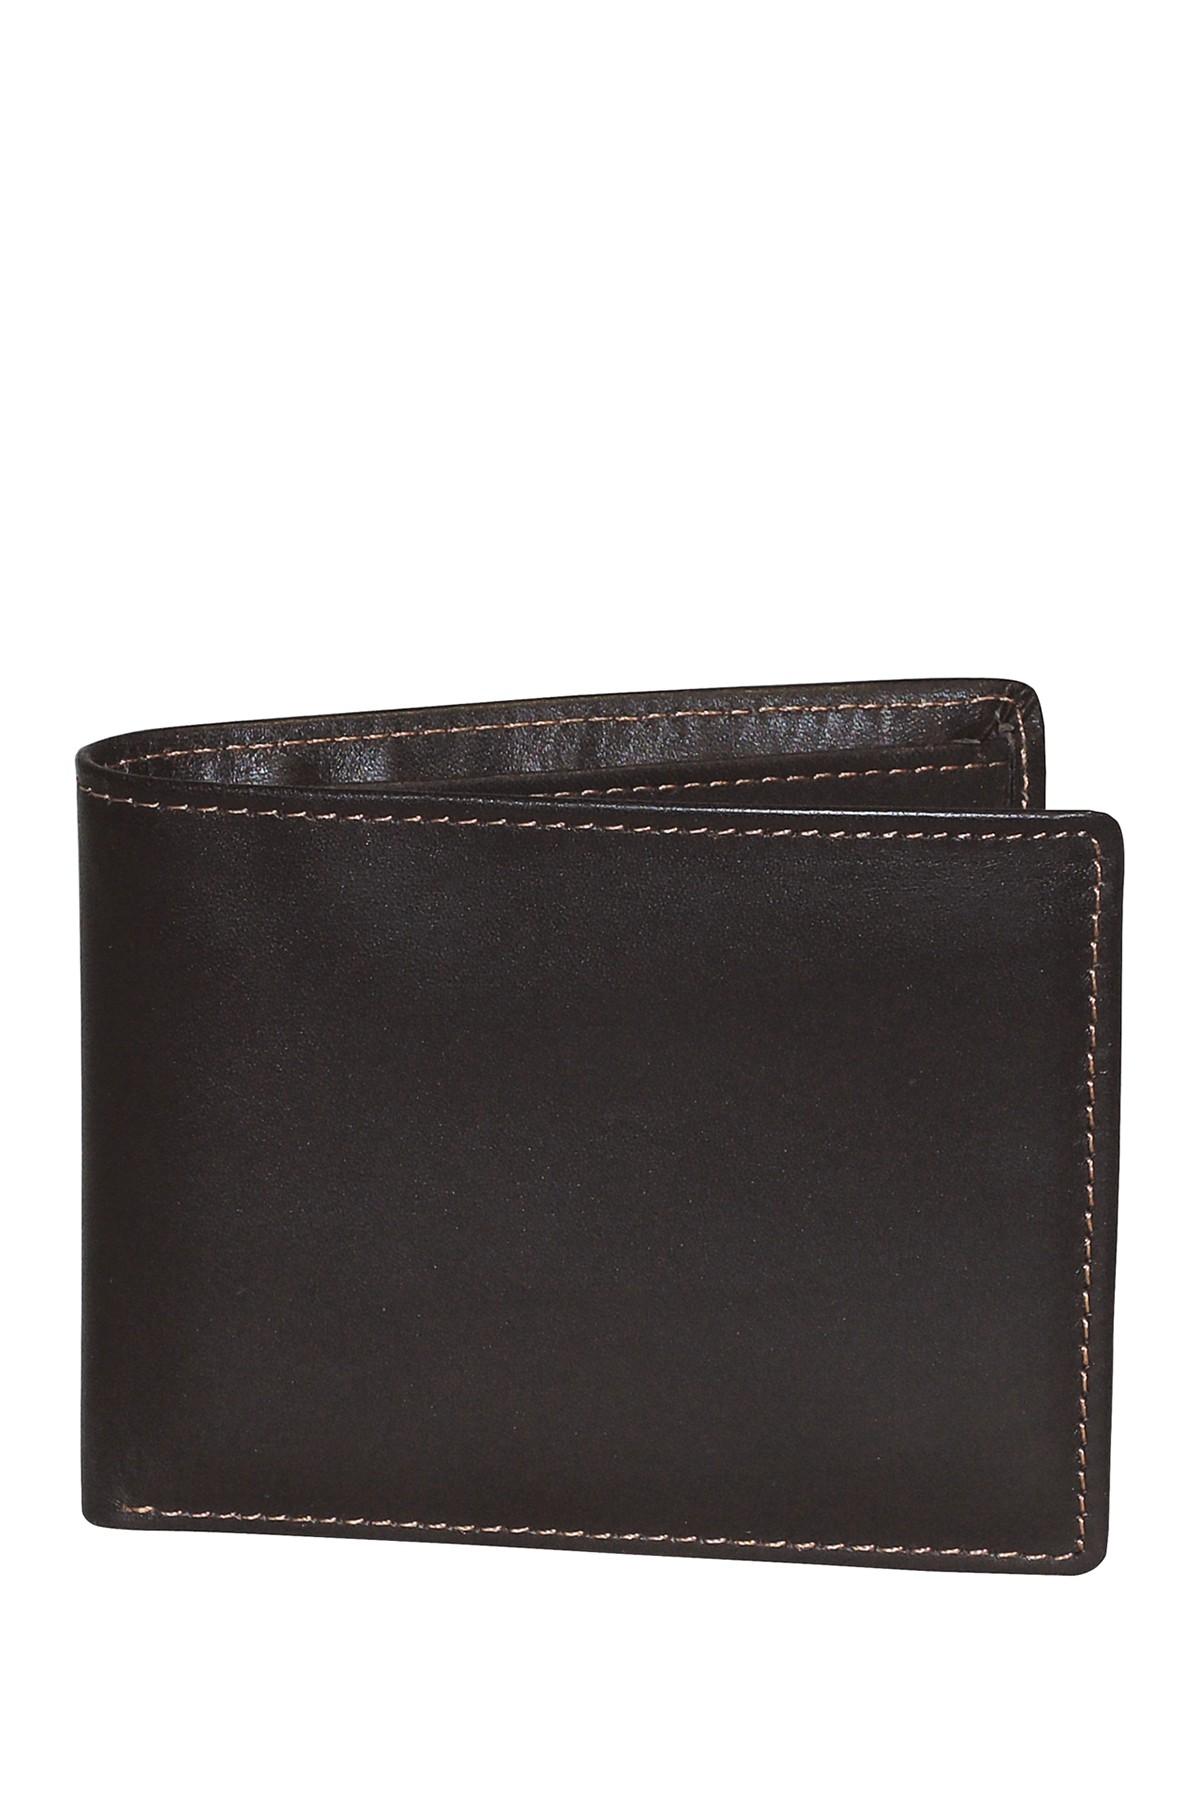 Buxton Dopp Regatta Leather Billfold Credit Card Leather Wallet in Black for Men - Lyst